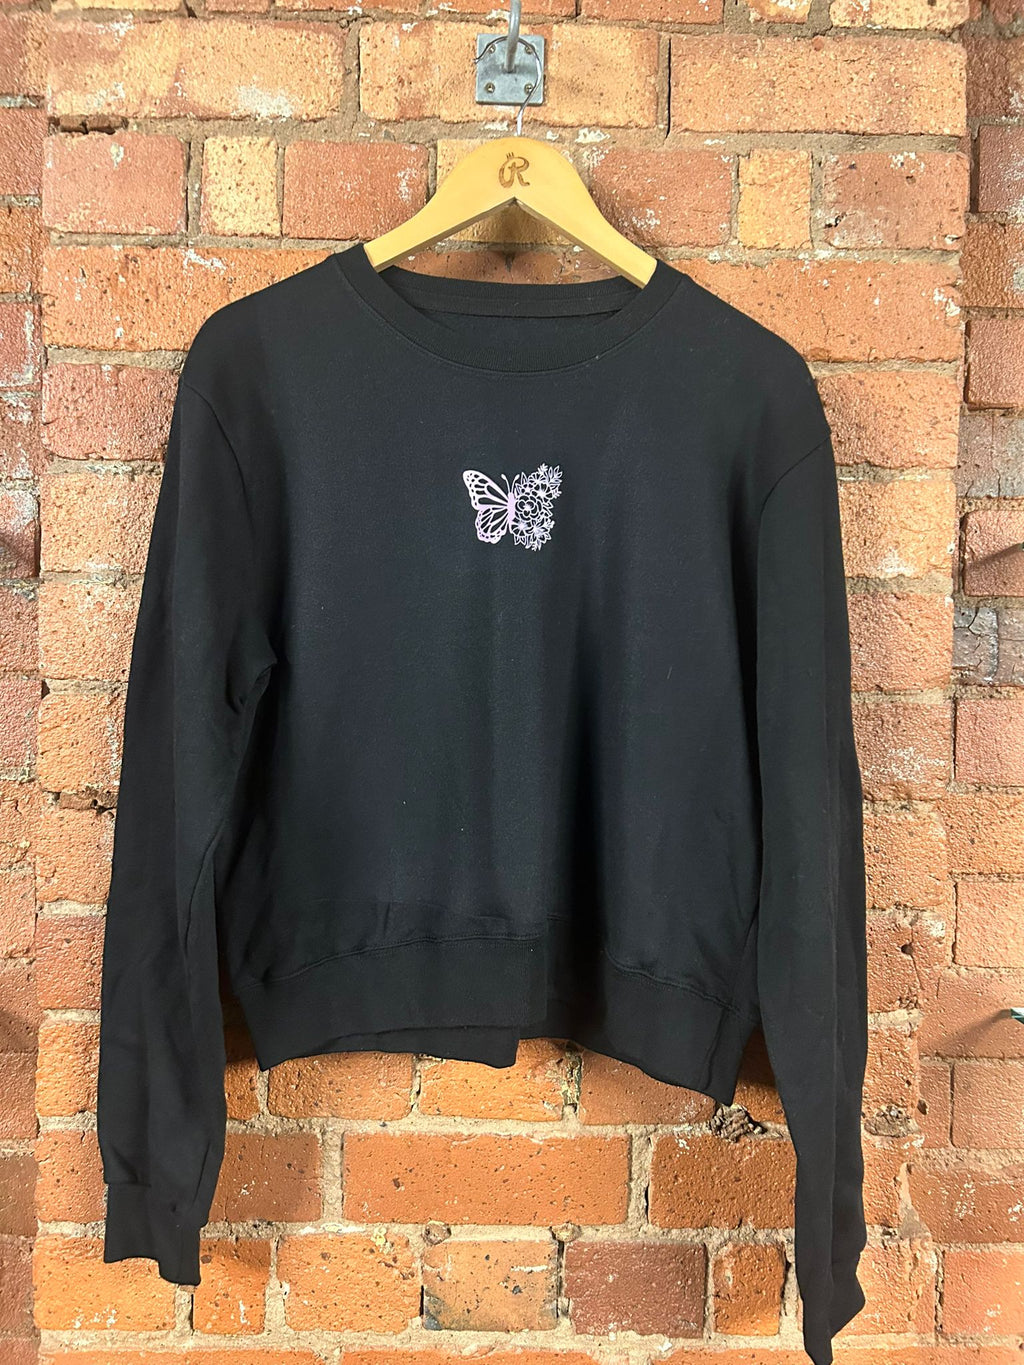 SALE Adult Medium Black Butterfly Print Cropped Sweatshirt